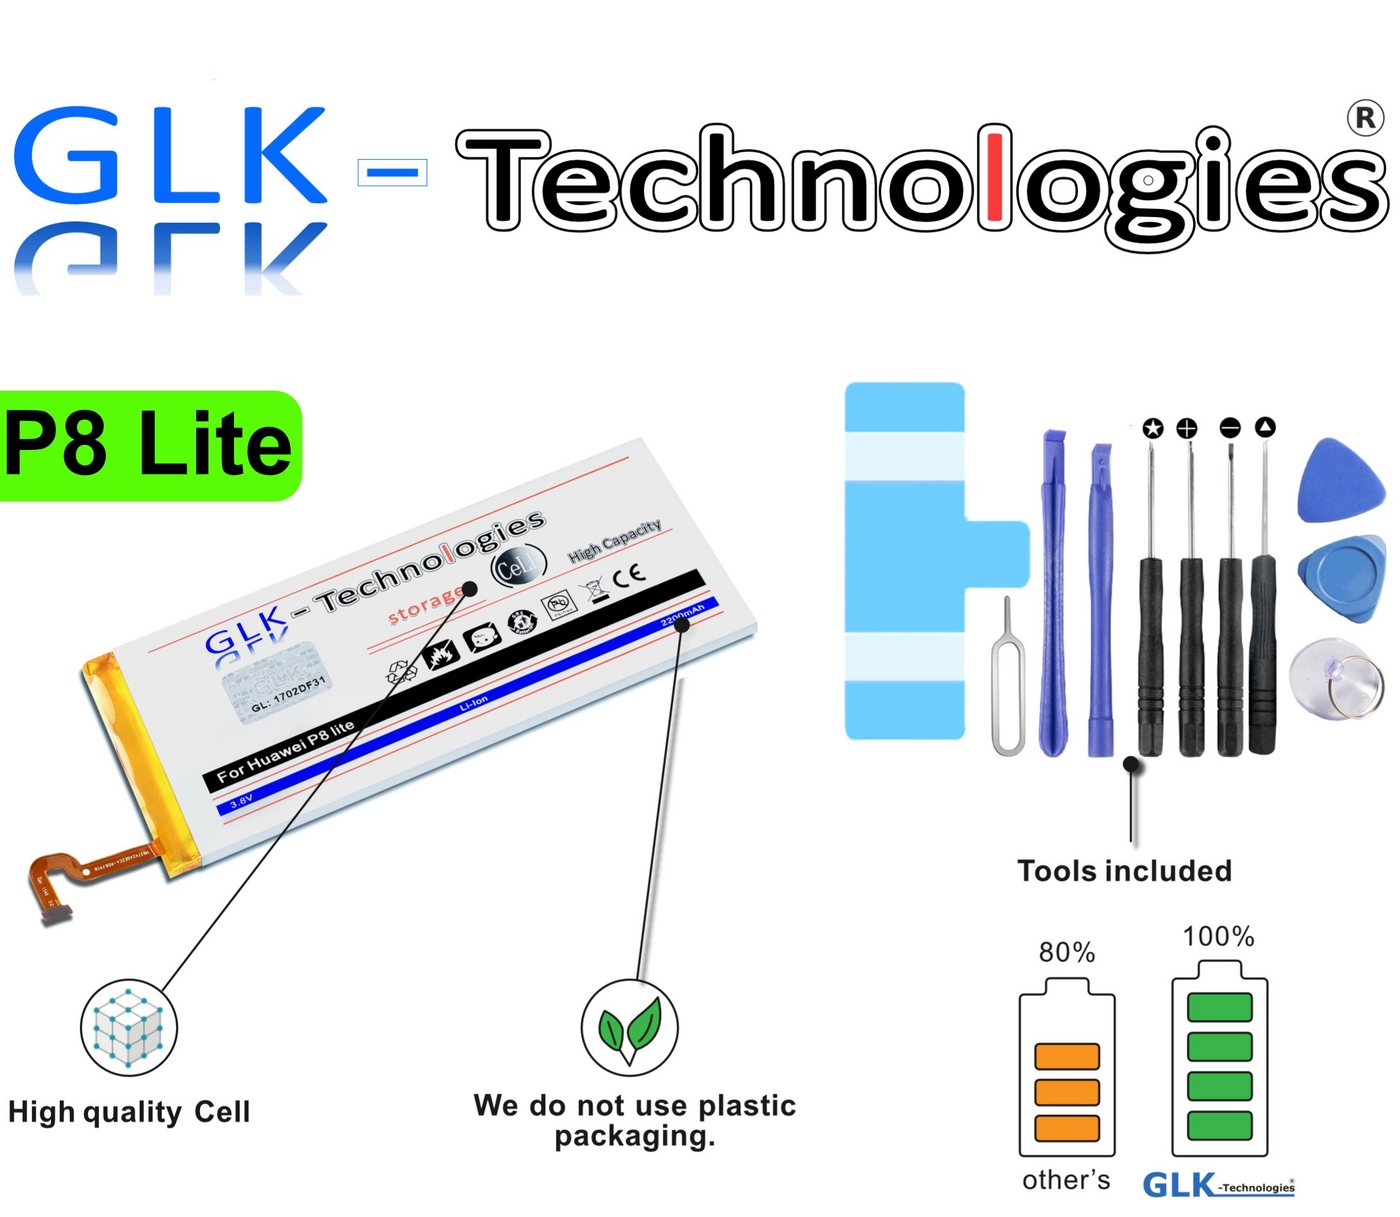 GLK-Technologies High Power Ersatzakku kompatibel mit Huawei P8 Lite HB3742A0EZC, Original GLK-Technologies Battery, accu, 2200 mAh Akku, inkl. Werkzeug Set Kit Smartphone-Akku 2200 mAh (3.8 V) von GLK-Technologies